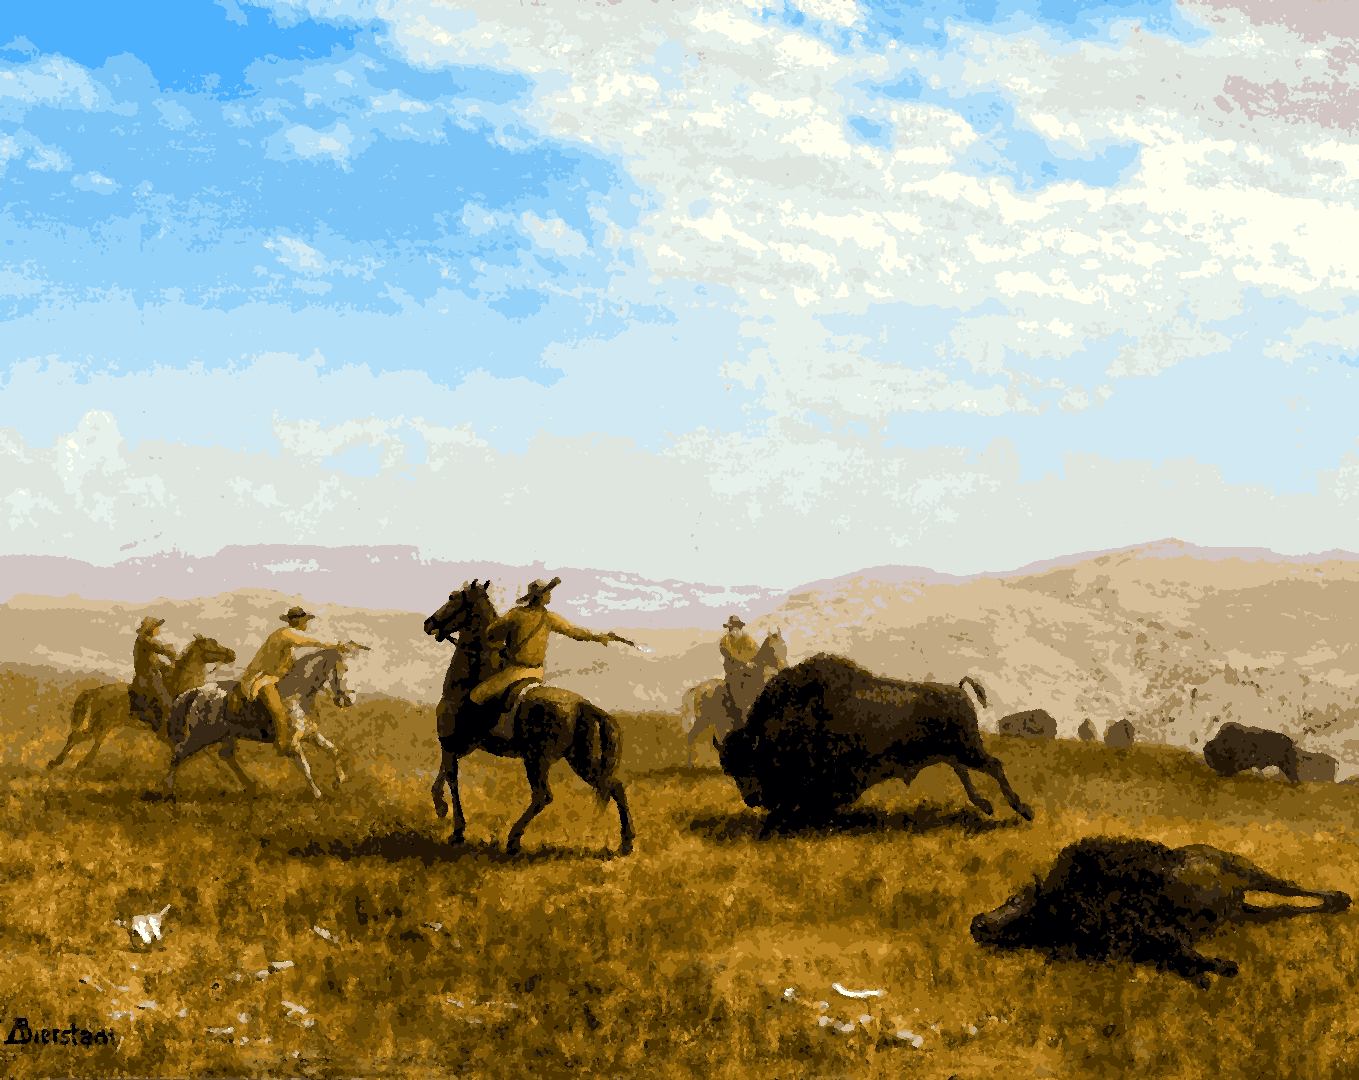 The Wild West by Albert Bierstadt - Van-Go Paint-By-Number Kit